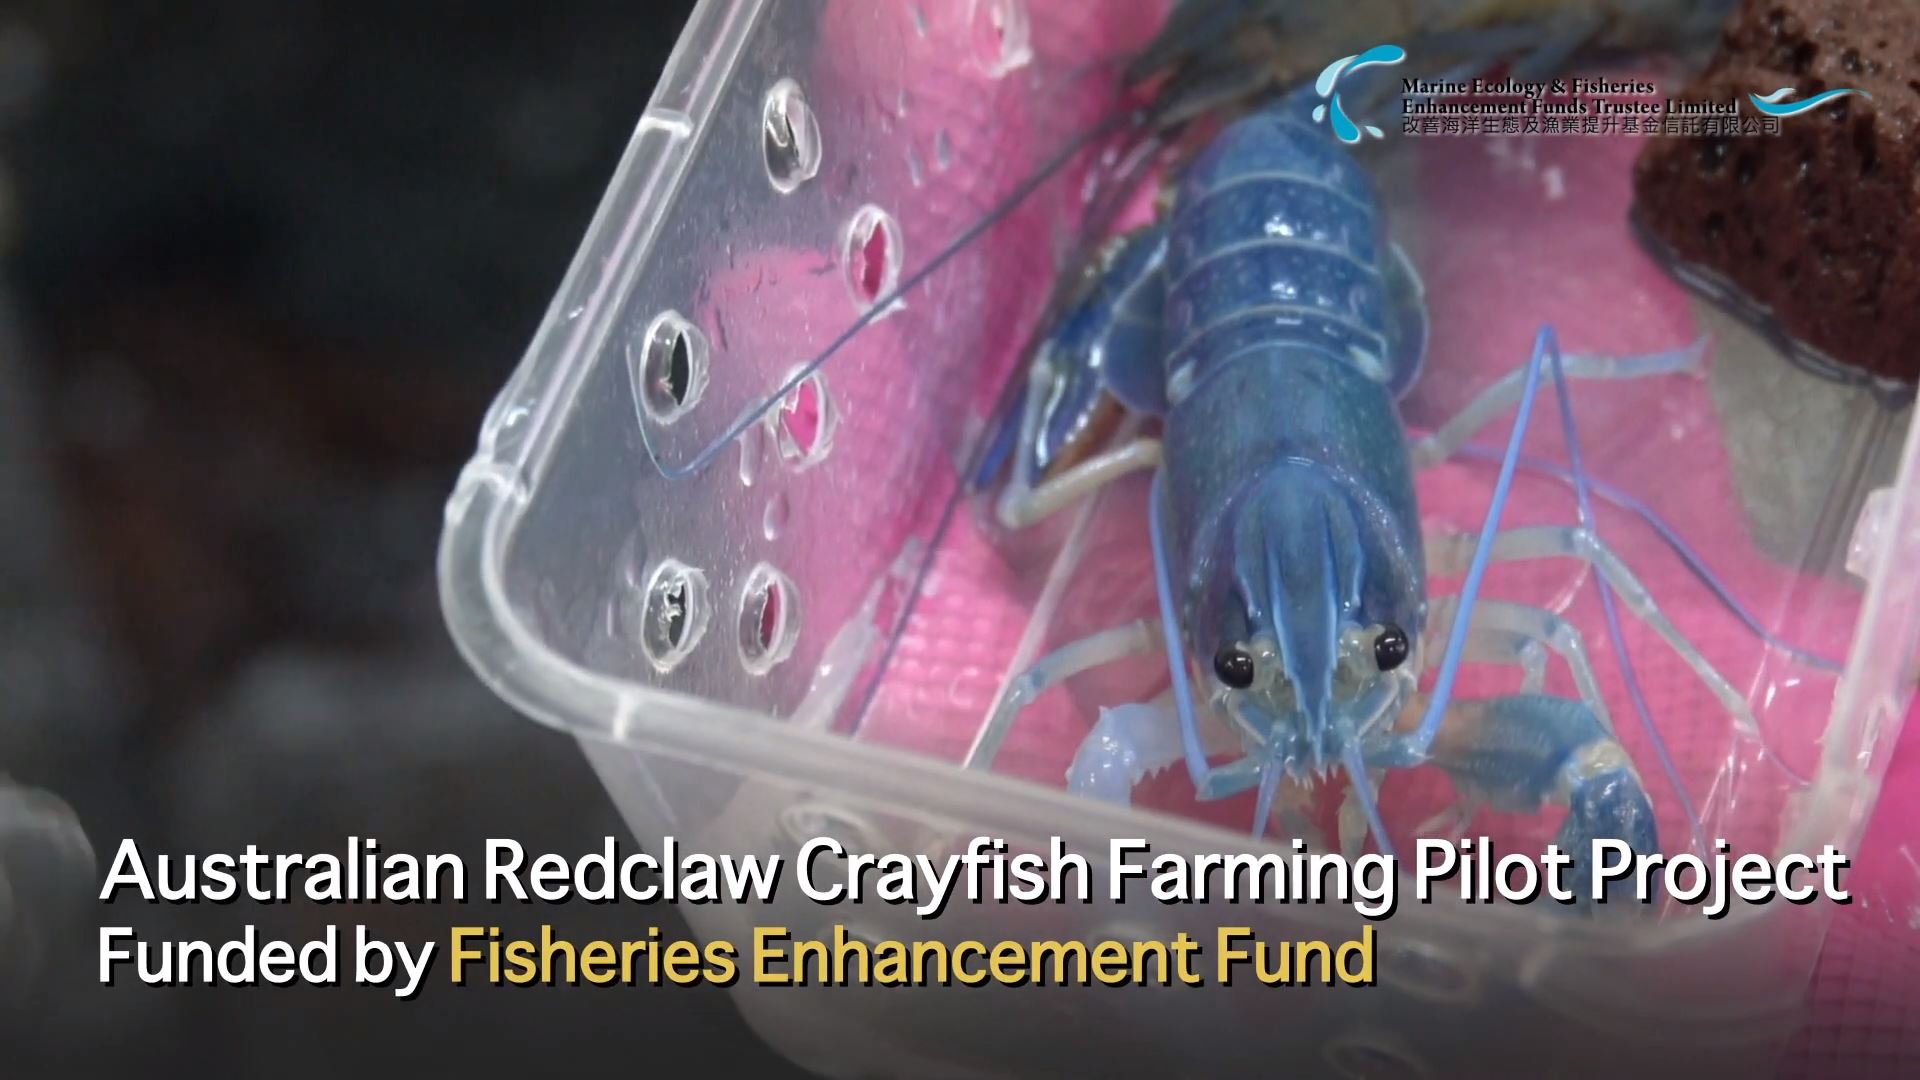 Fisheries Enhancement Fund – Australian Redclaw Crayfish Farming Pilot Project